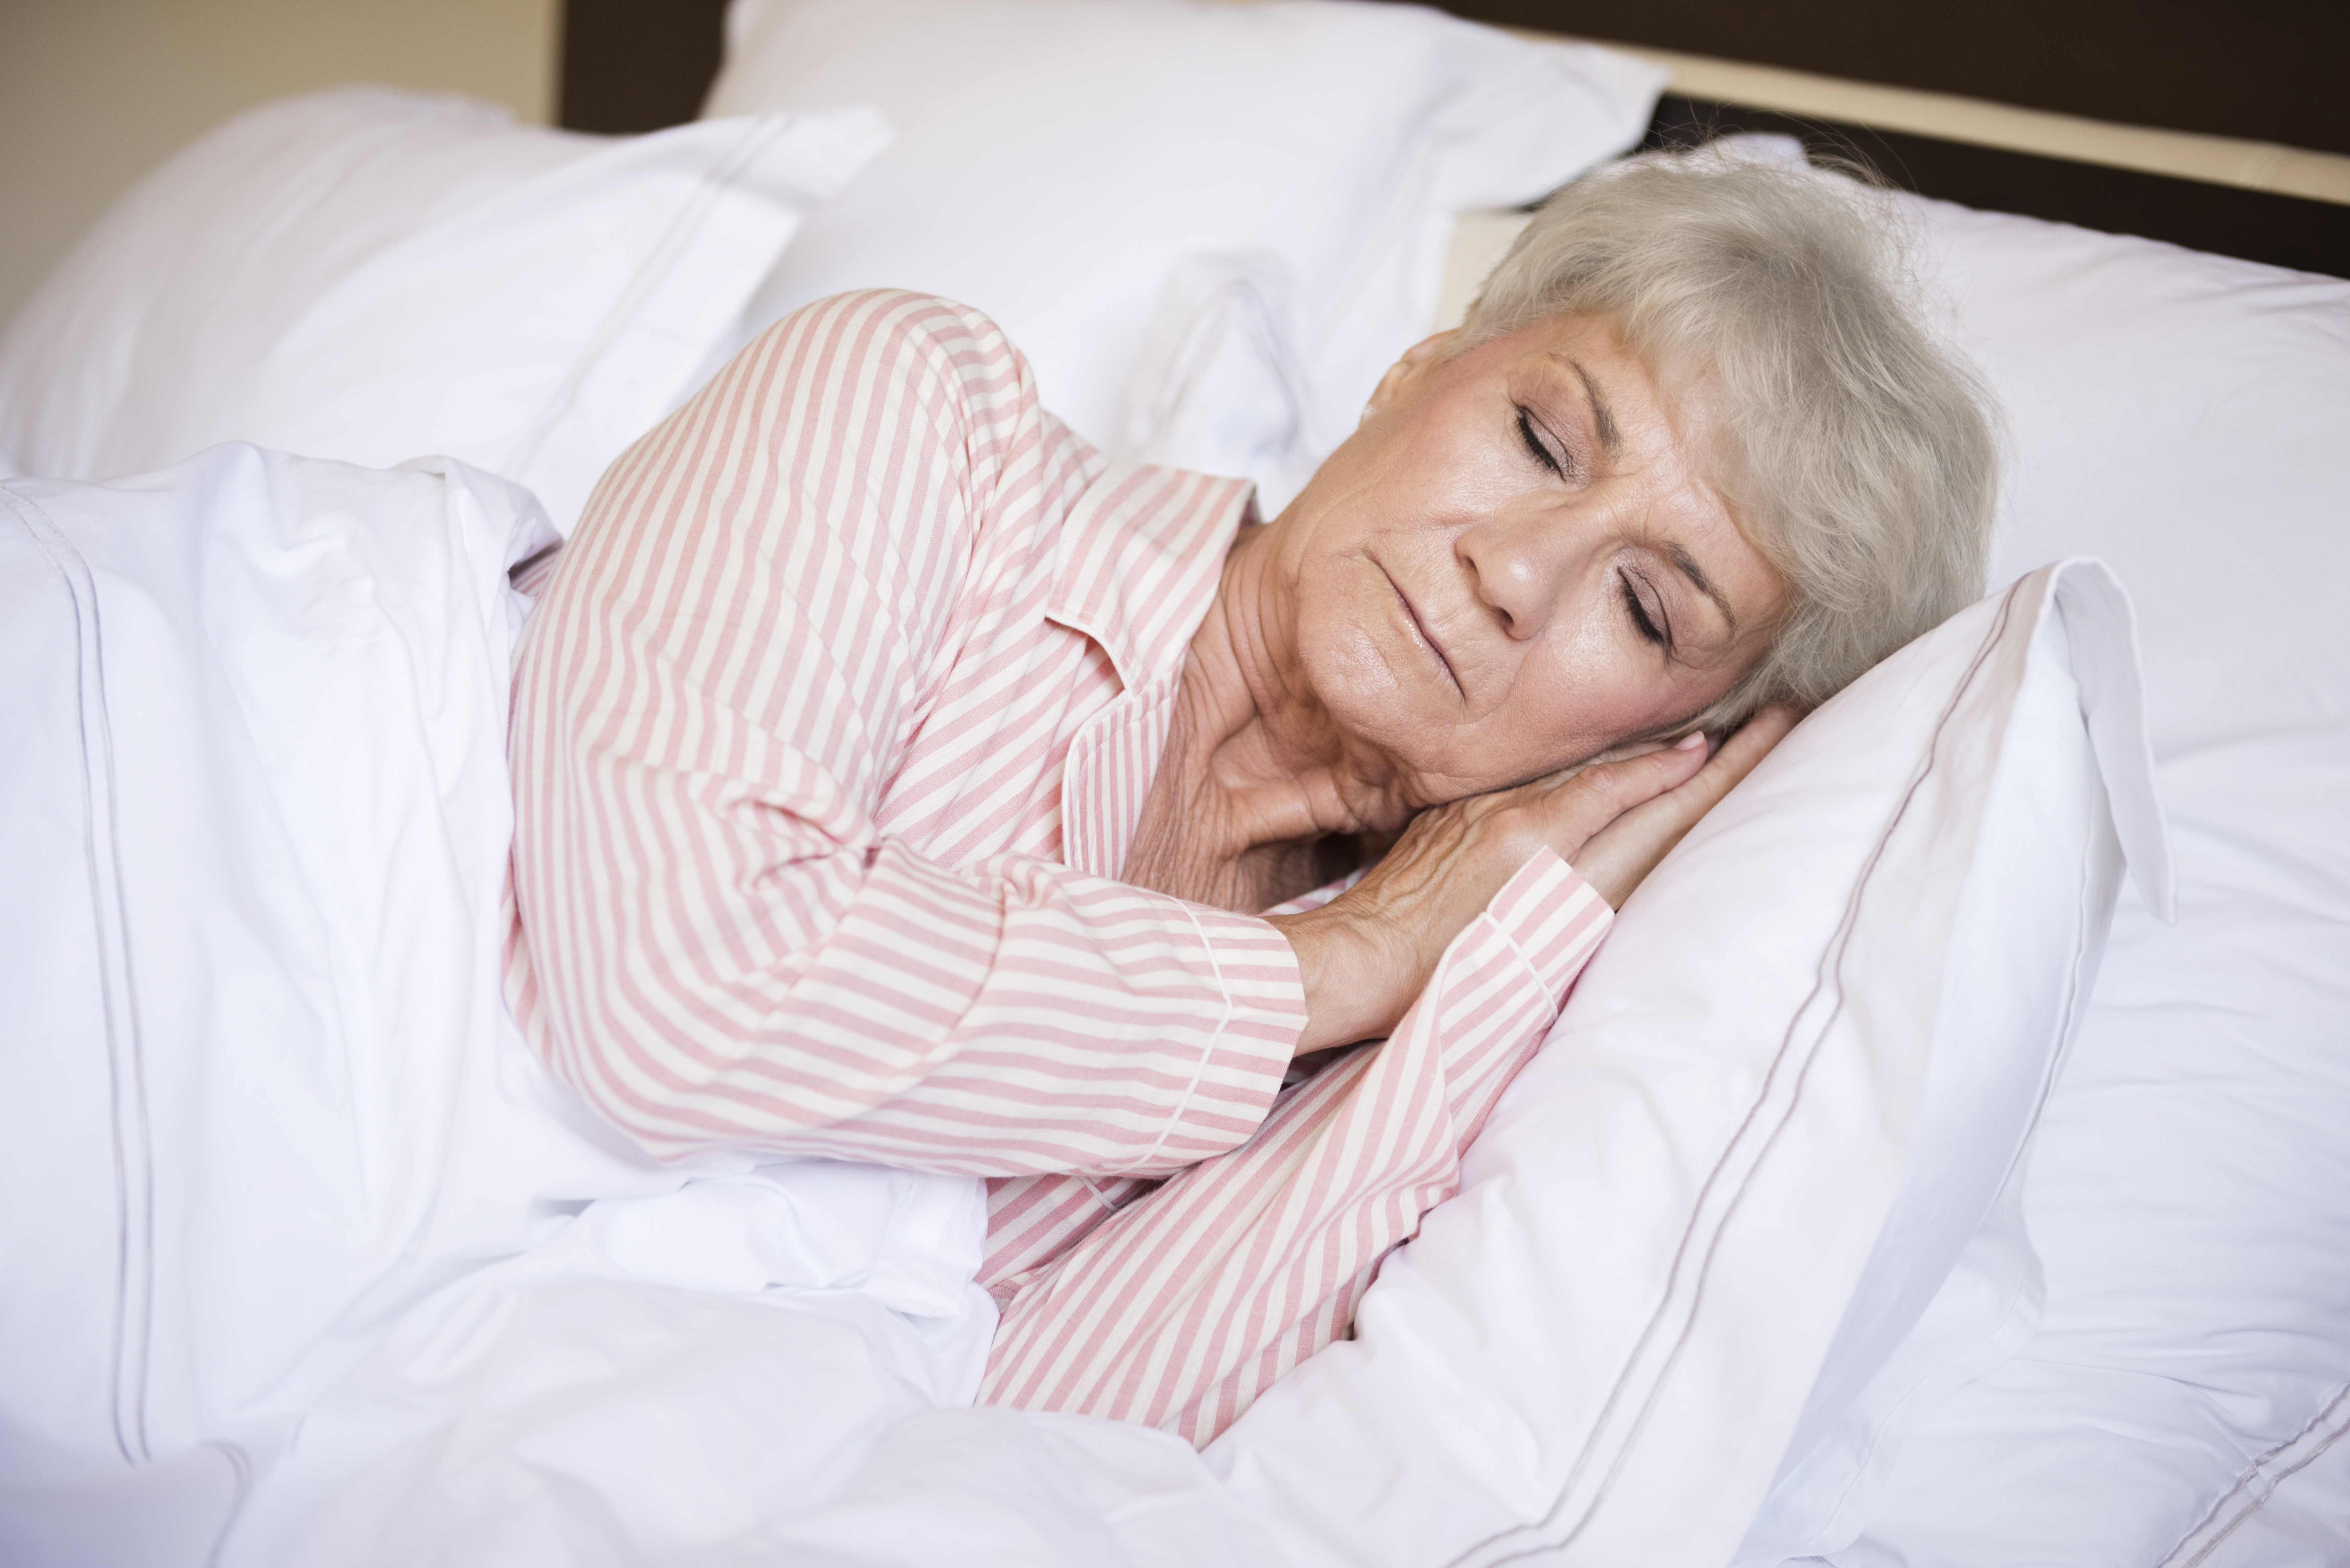 An elderly woman in bed | Source: Freepik